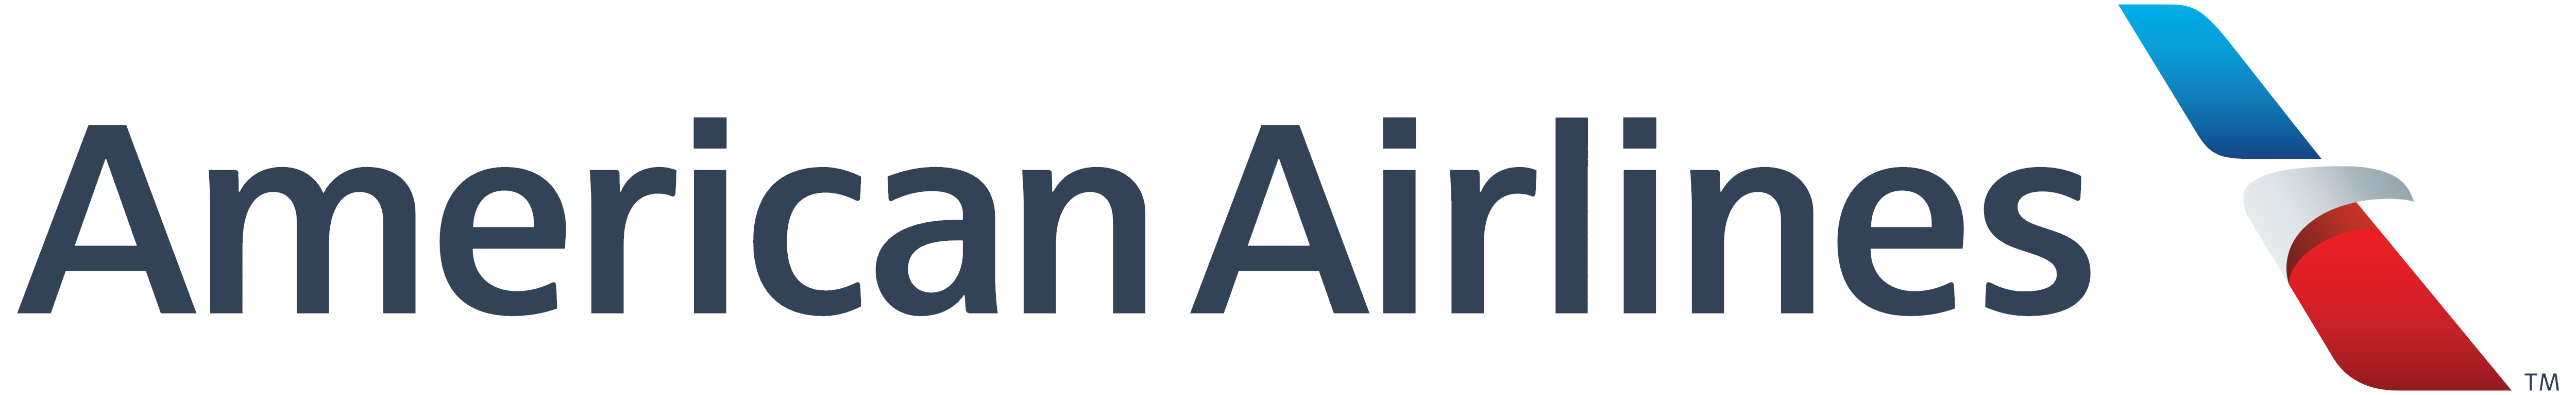 Logotip al companiilor aeriene americane